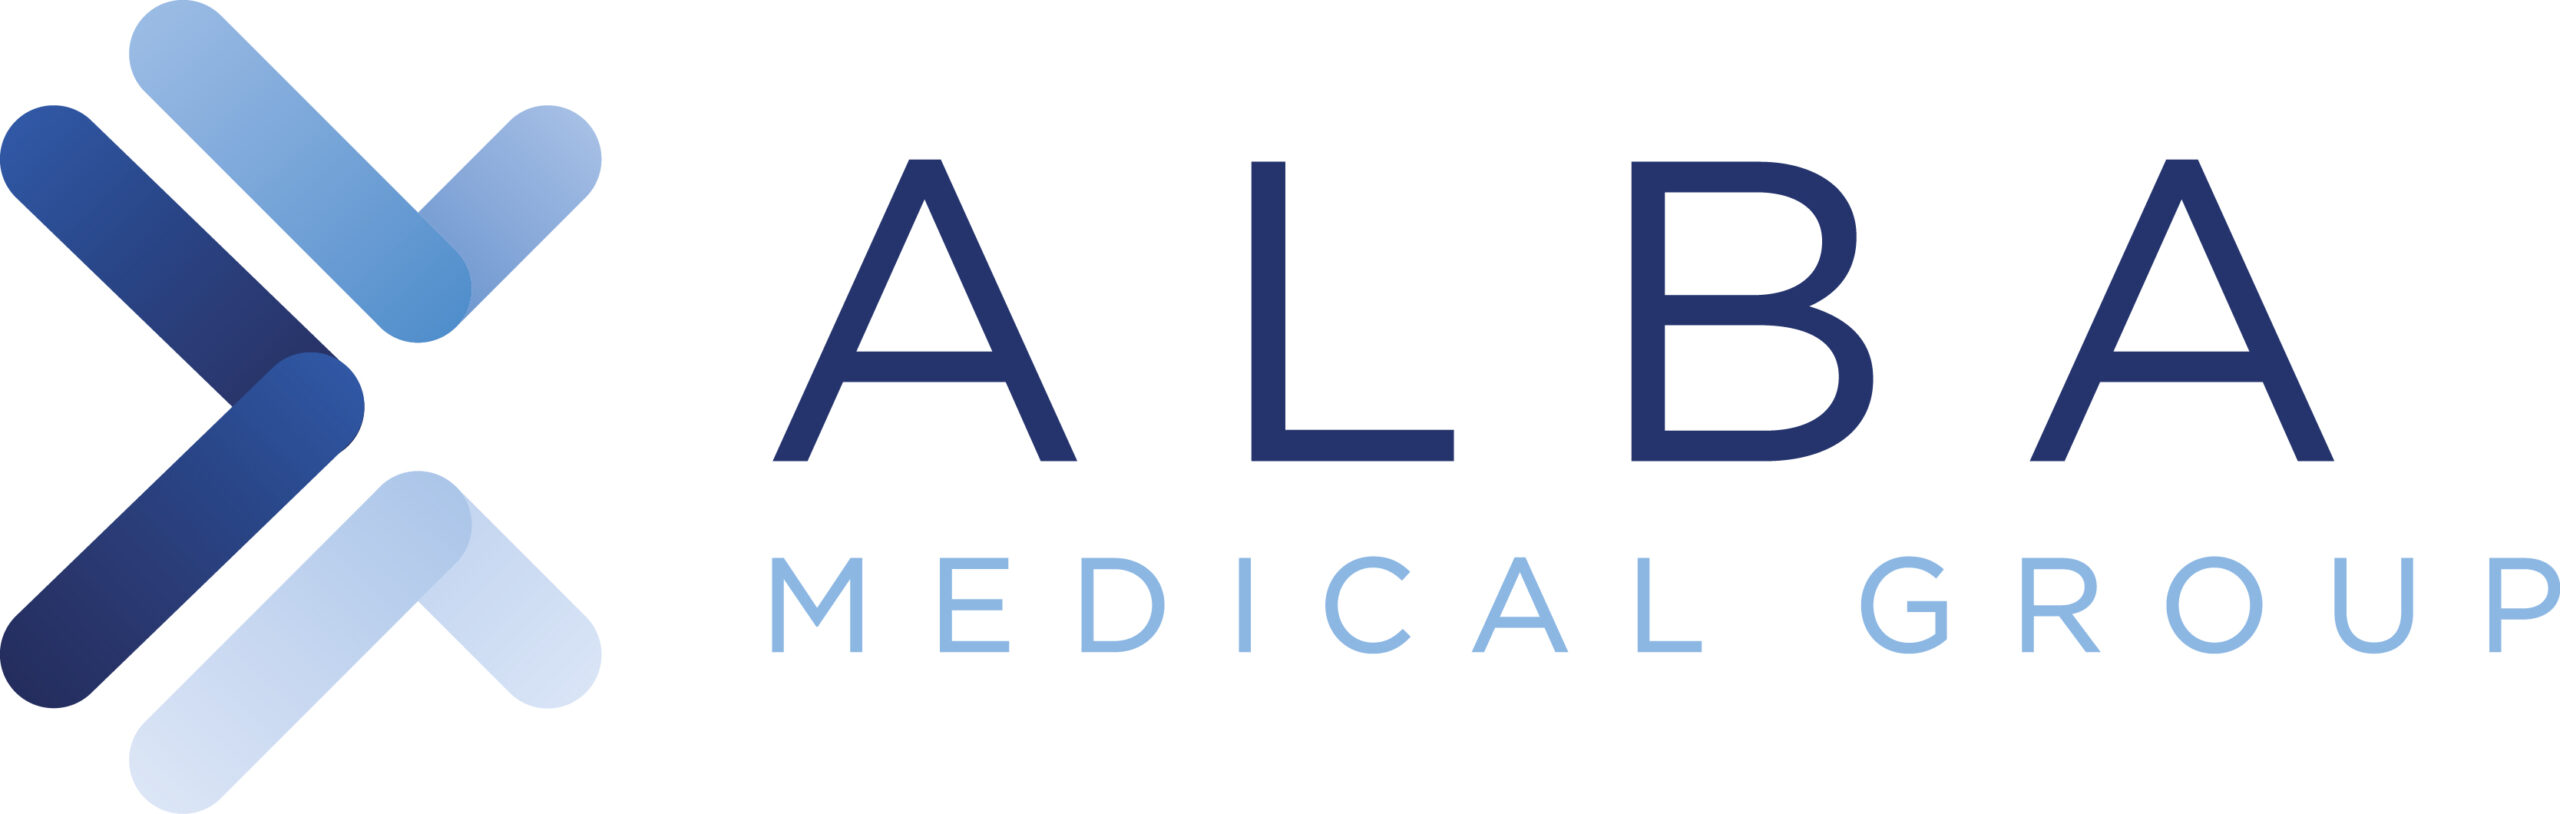 ALBA Medical Group